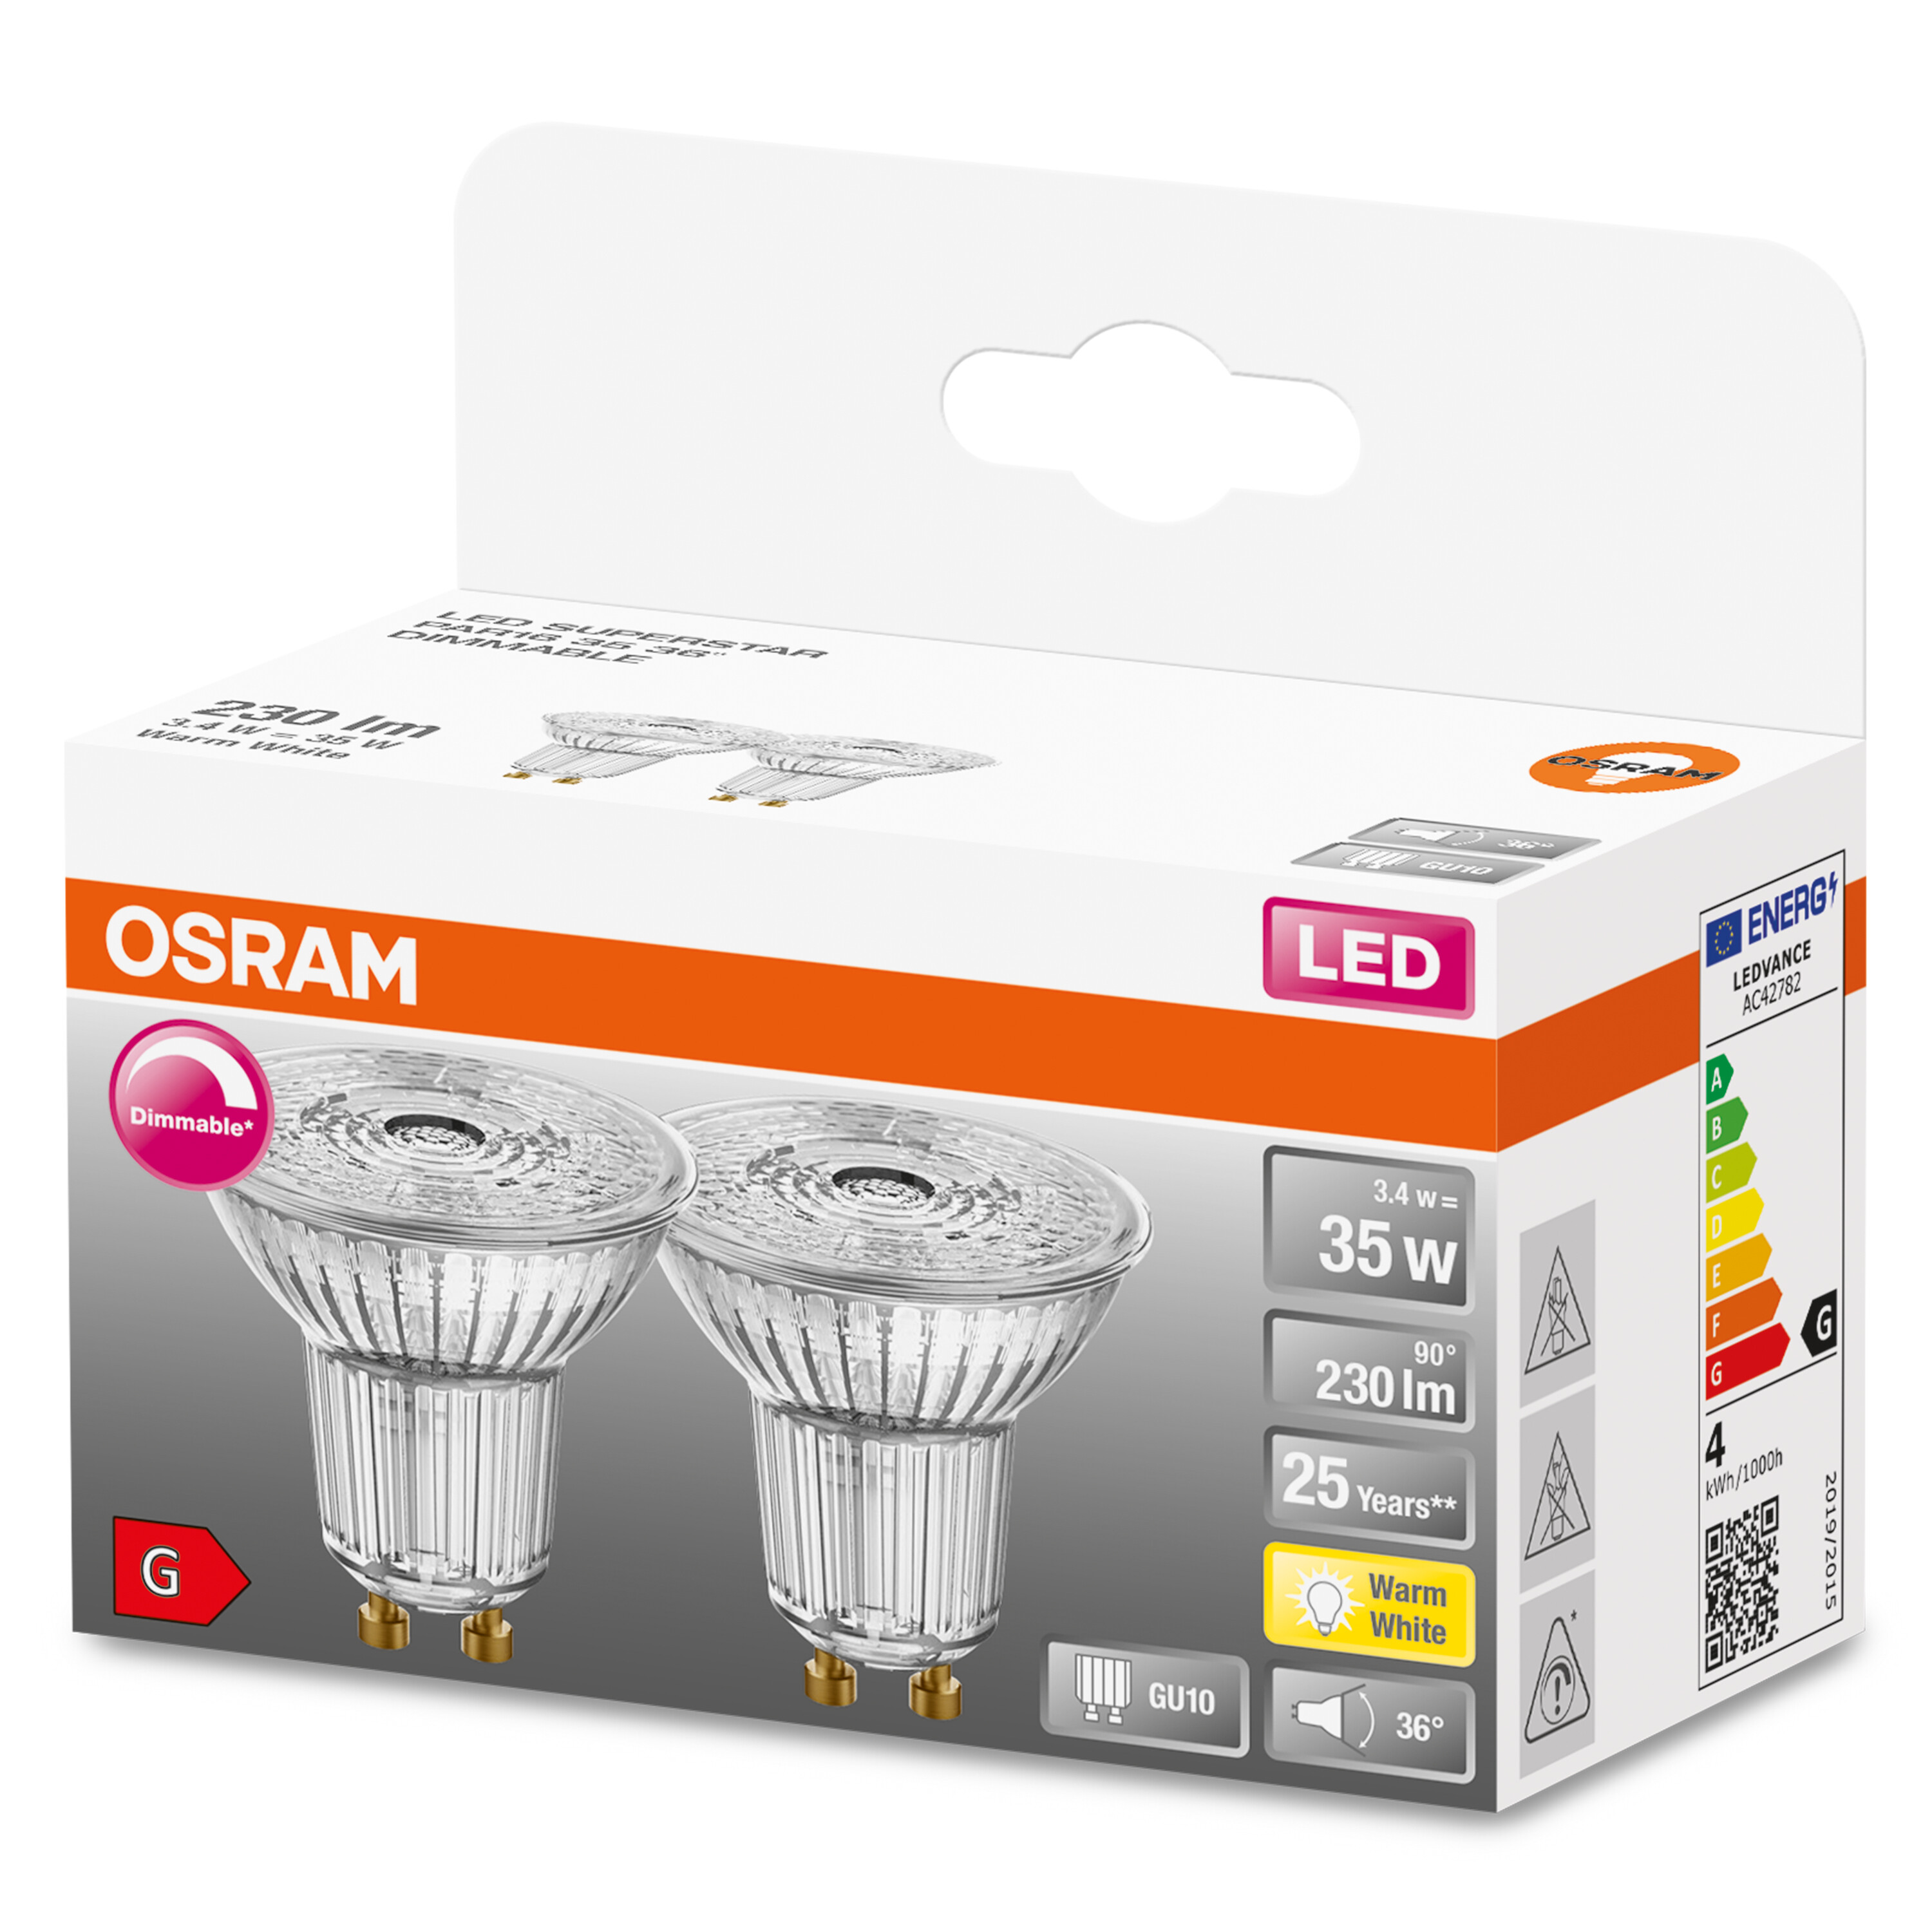 OSRAM  LED SUPERSTAR PAR16 Lumen Warmweiß 230 Lampe LED